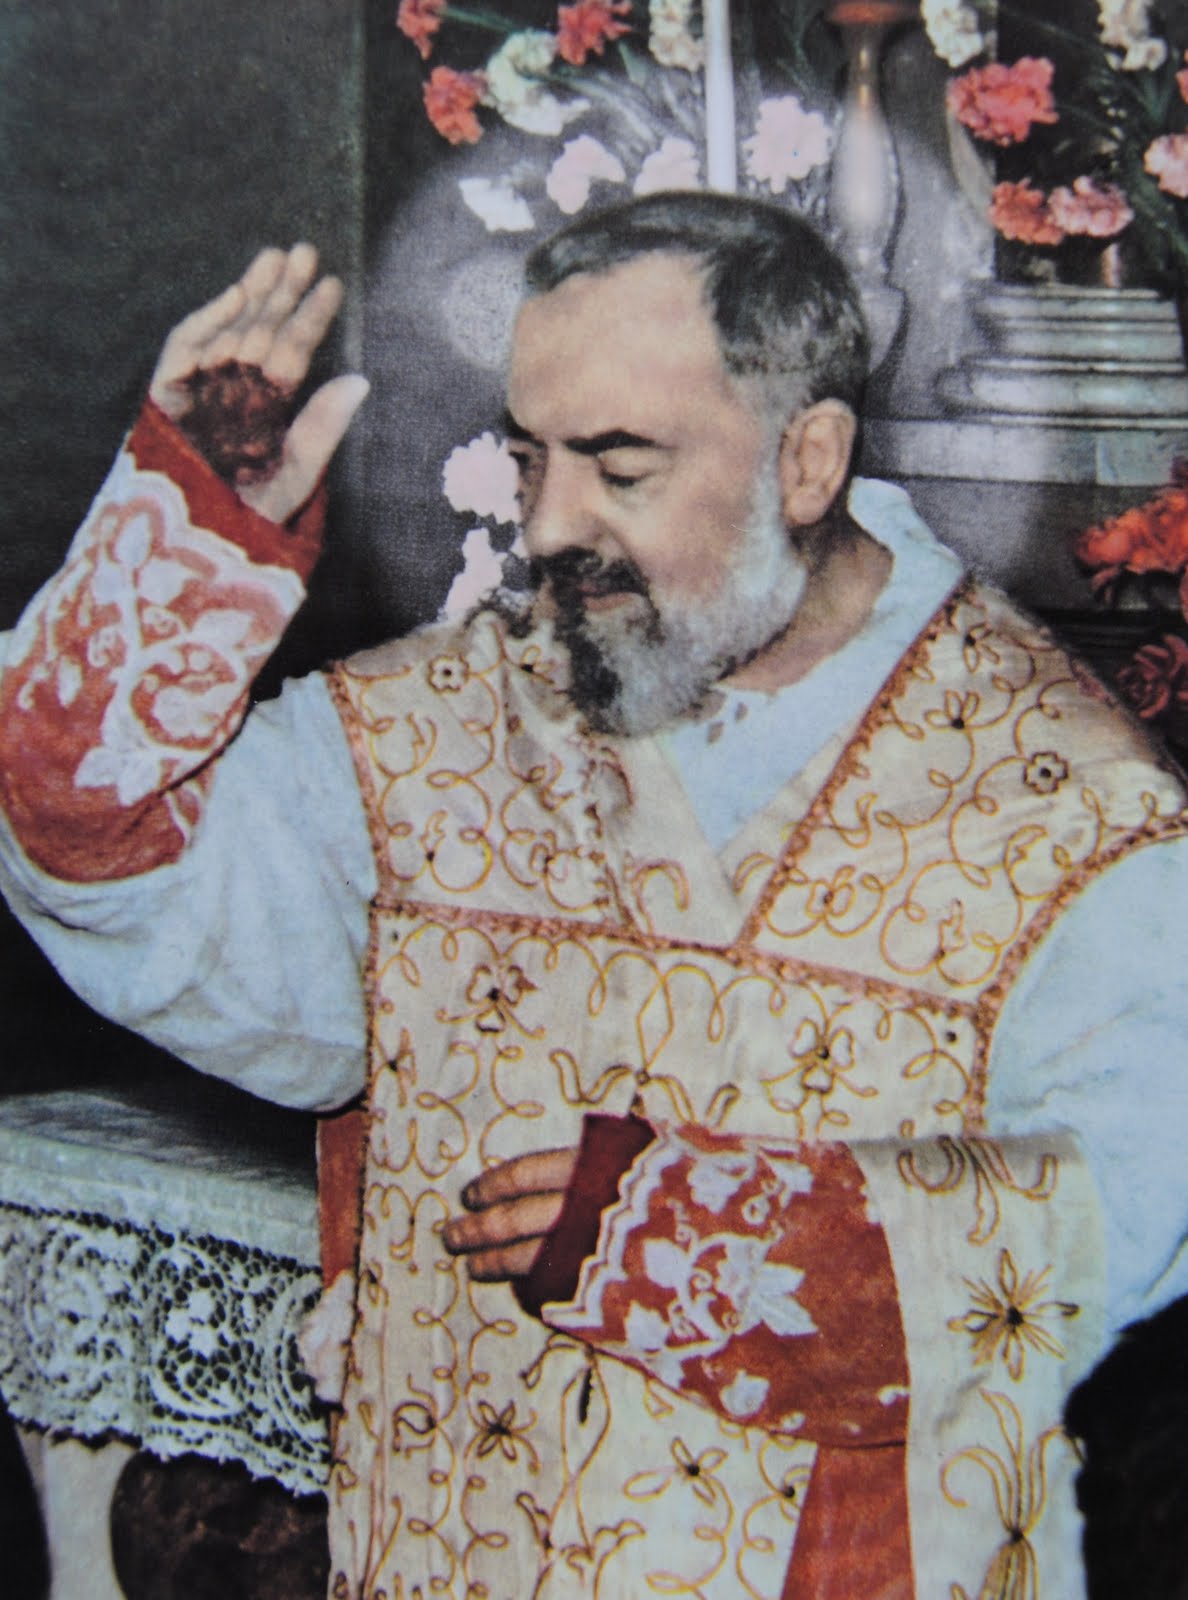 Padre Pio with the Stigmata. Source: commons.wikimedia.org